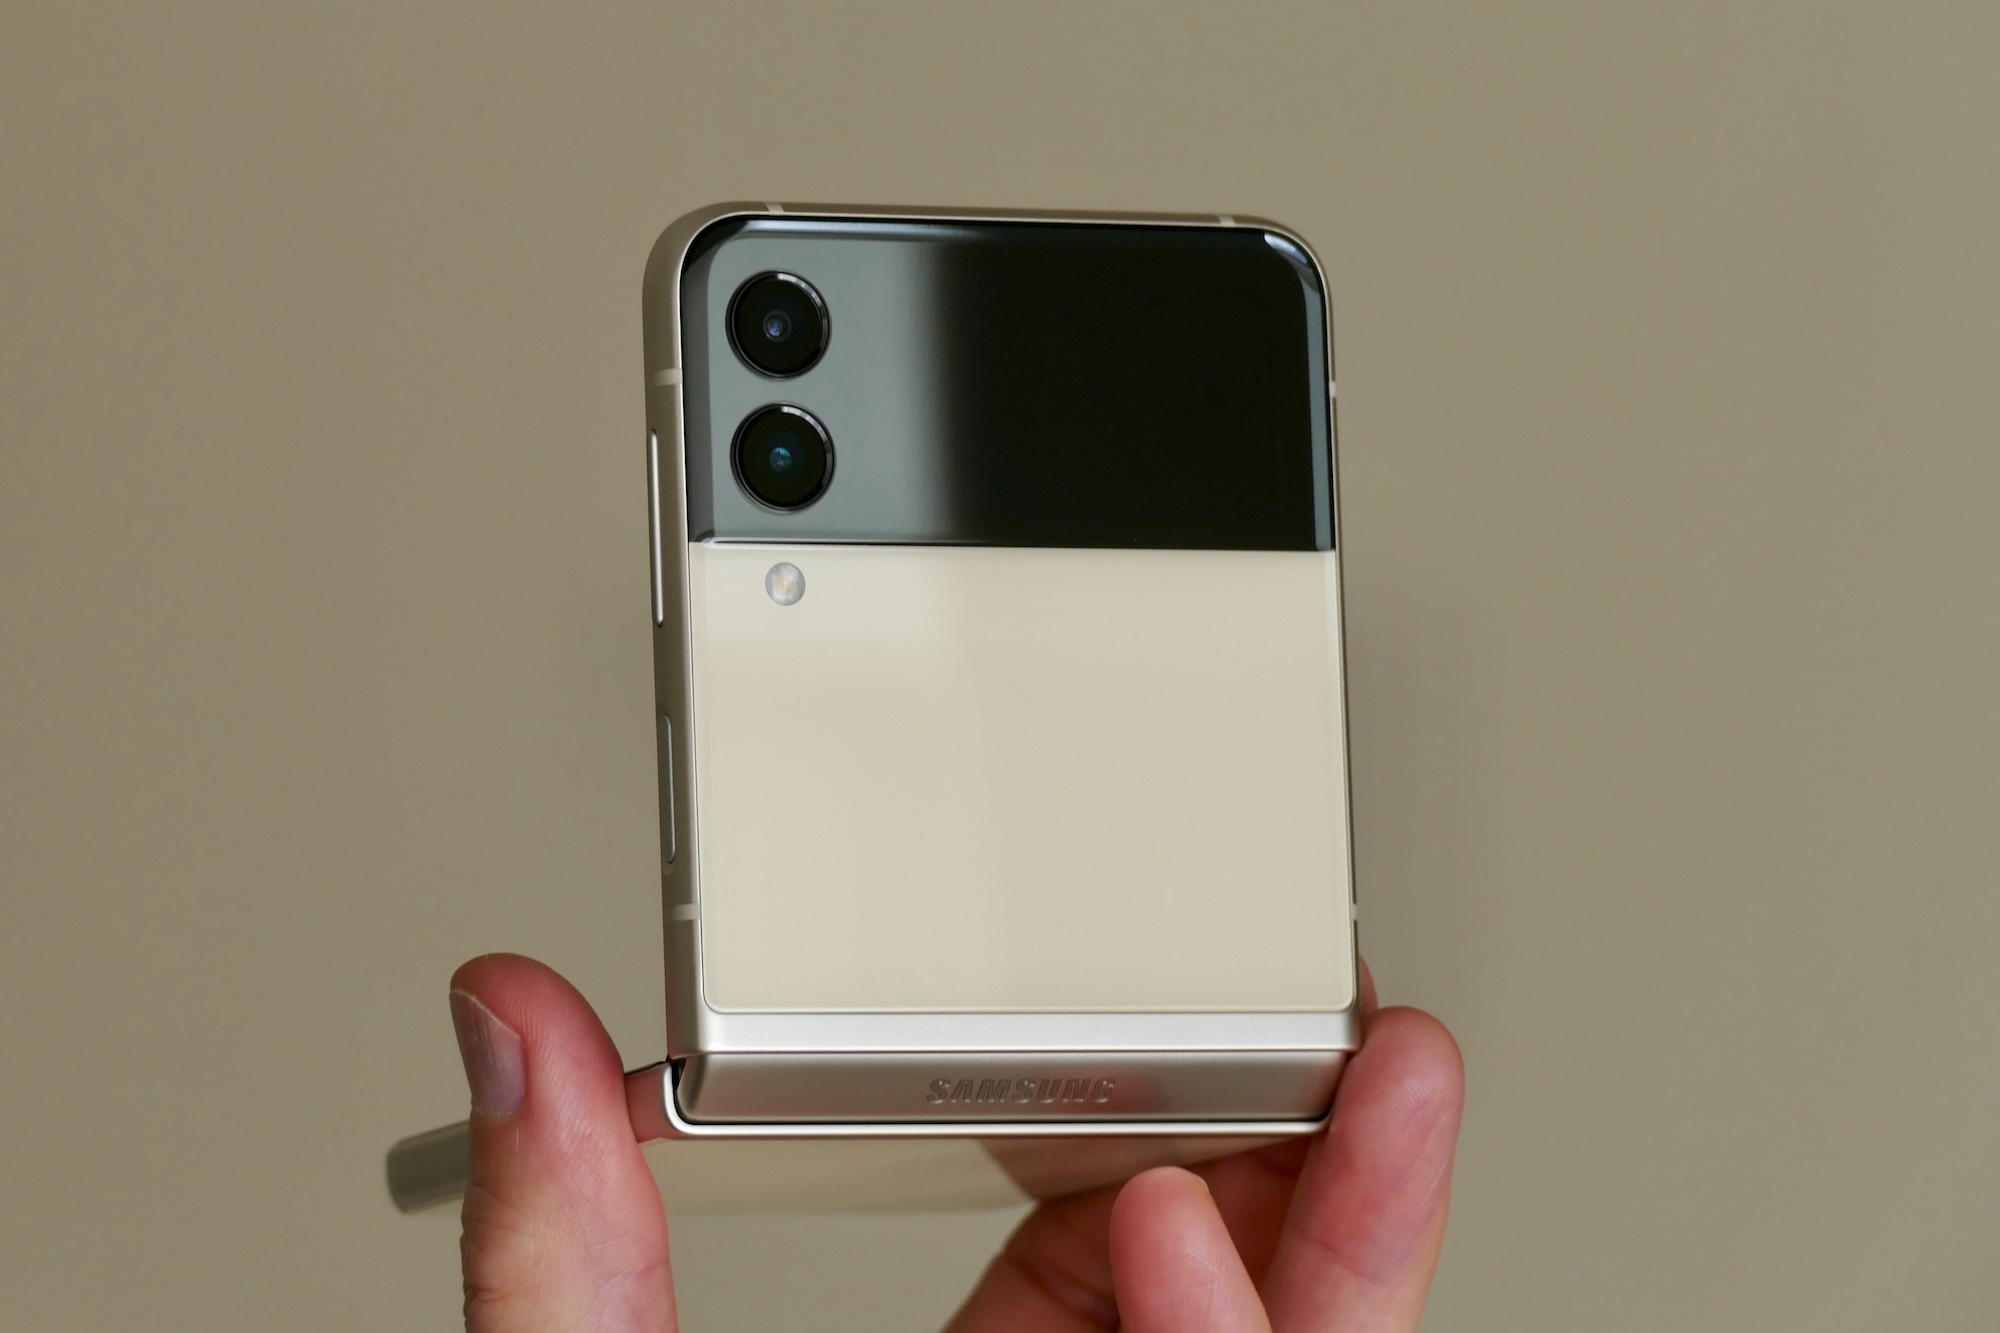 SAMSUNG Galaxy Z Flip 3 5G Cell Phone, Factory Unlocked Android Smartphone,  256GB, Flex Mode, Super Steady Camera, Ultra Compact, US Version, Phantom